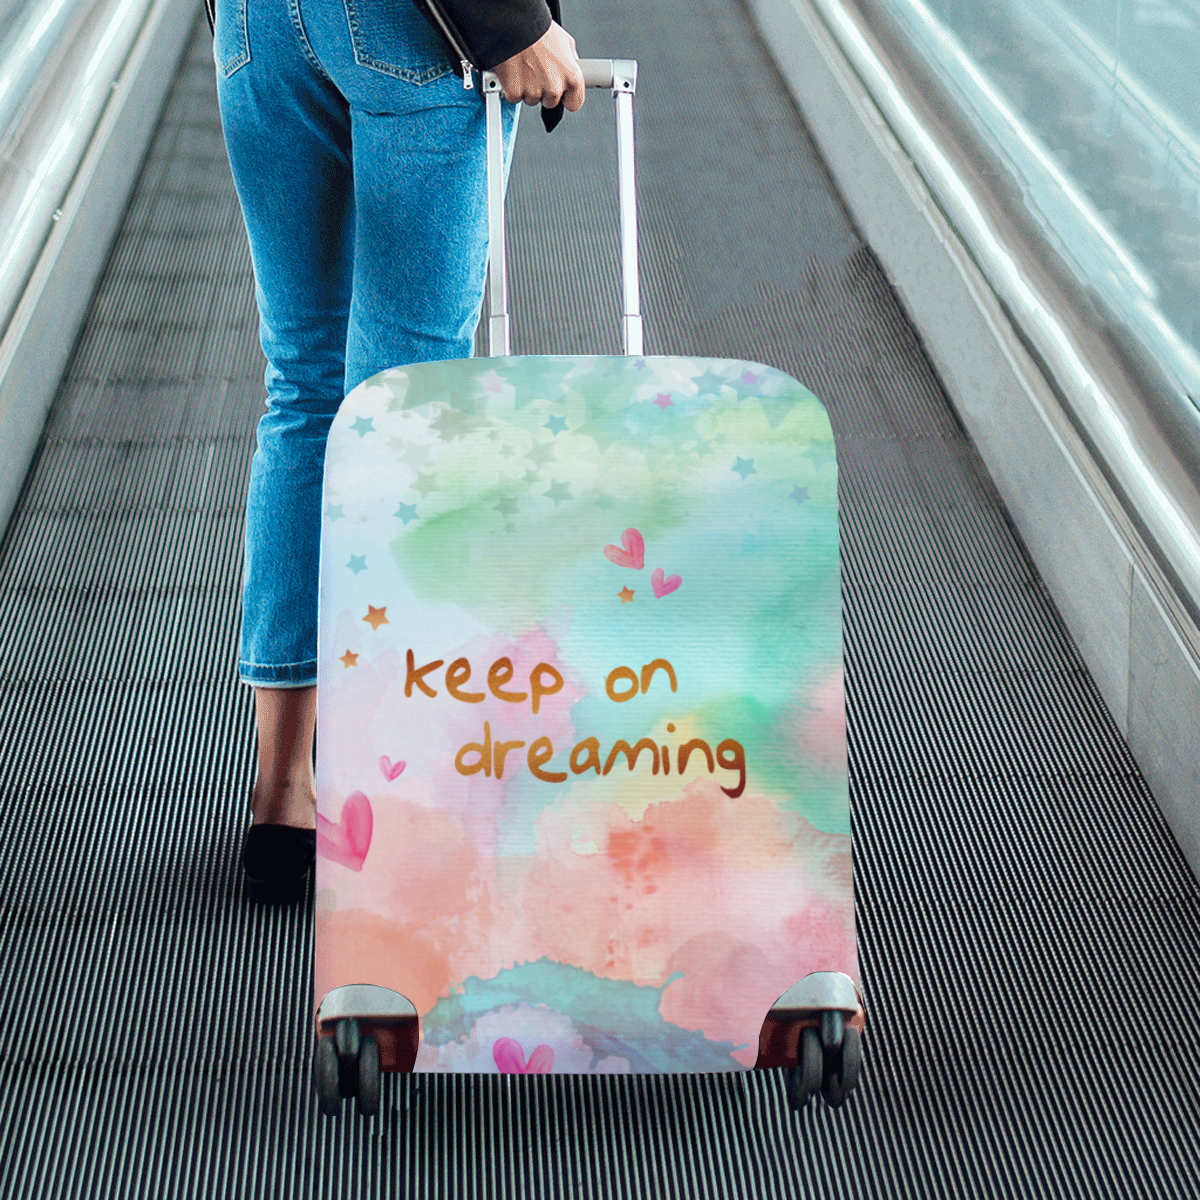 KEEP ON DREAMING - pastel Luggage Cover/Medium 22"-25"